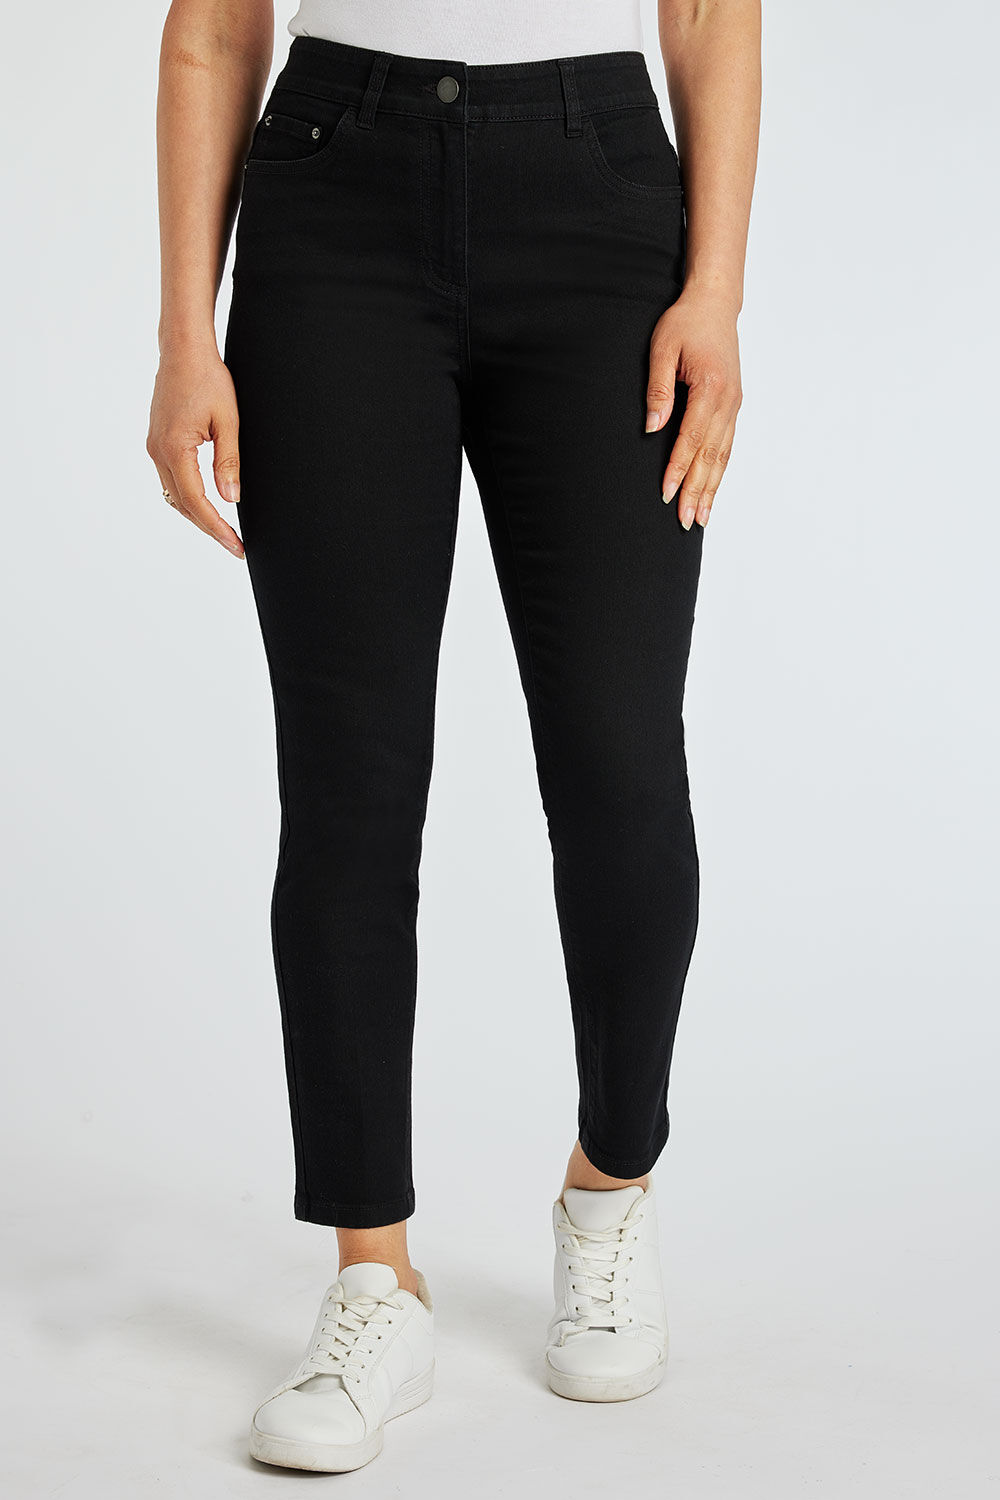 Bonmarche Black The Susie Slim Leg Jeans, Size: 10